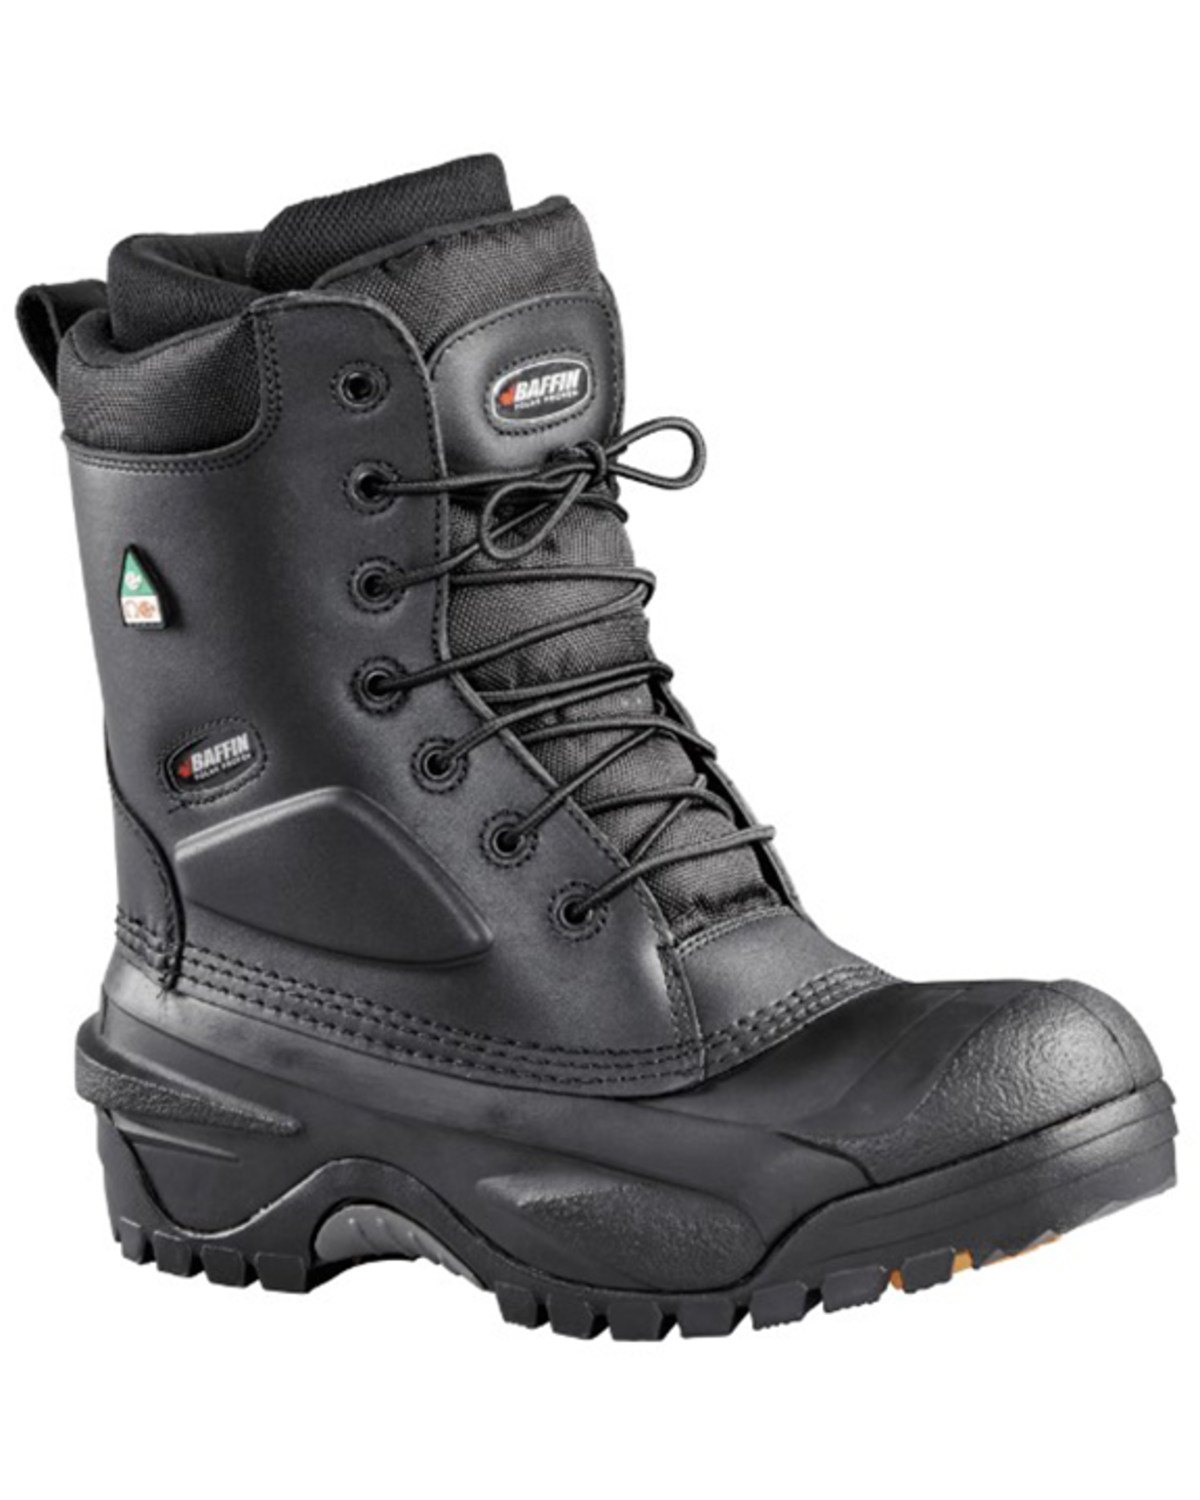 Baffin Men's Workhorse (STP) Safety Boots - Composite Toe